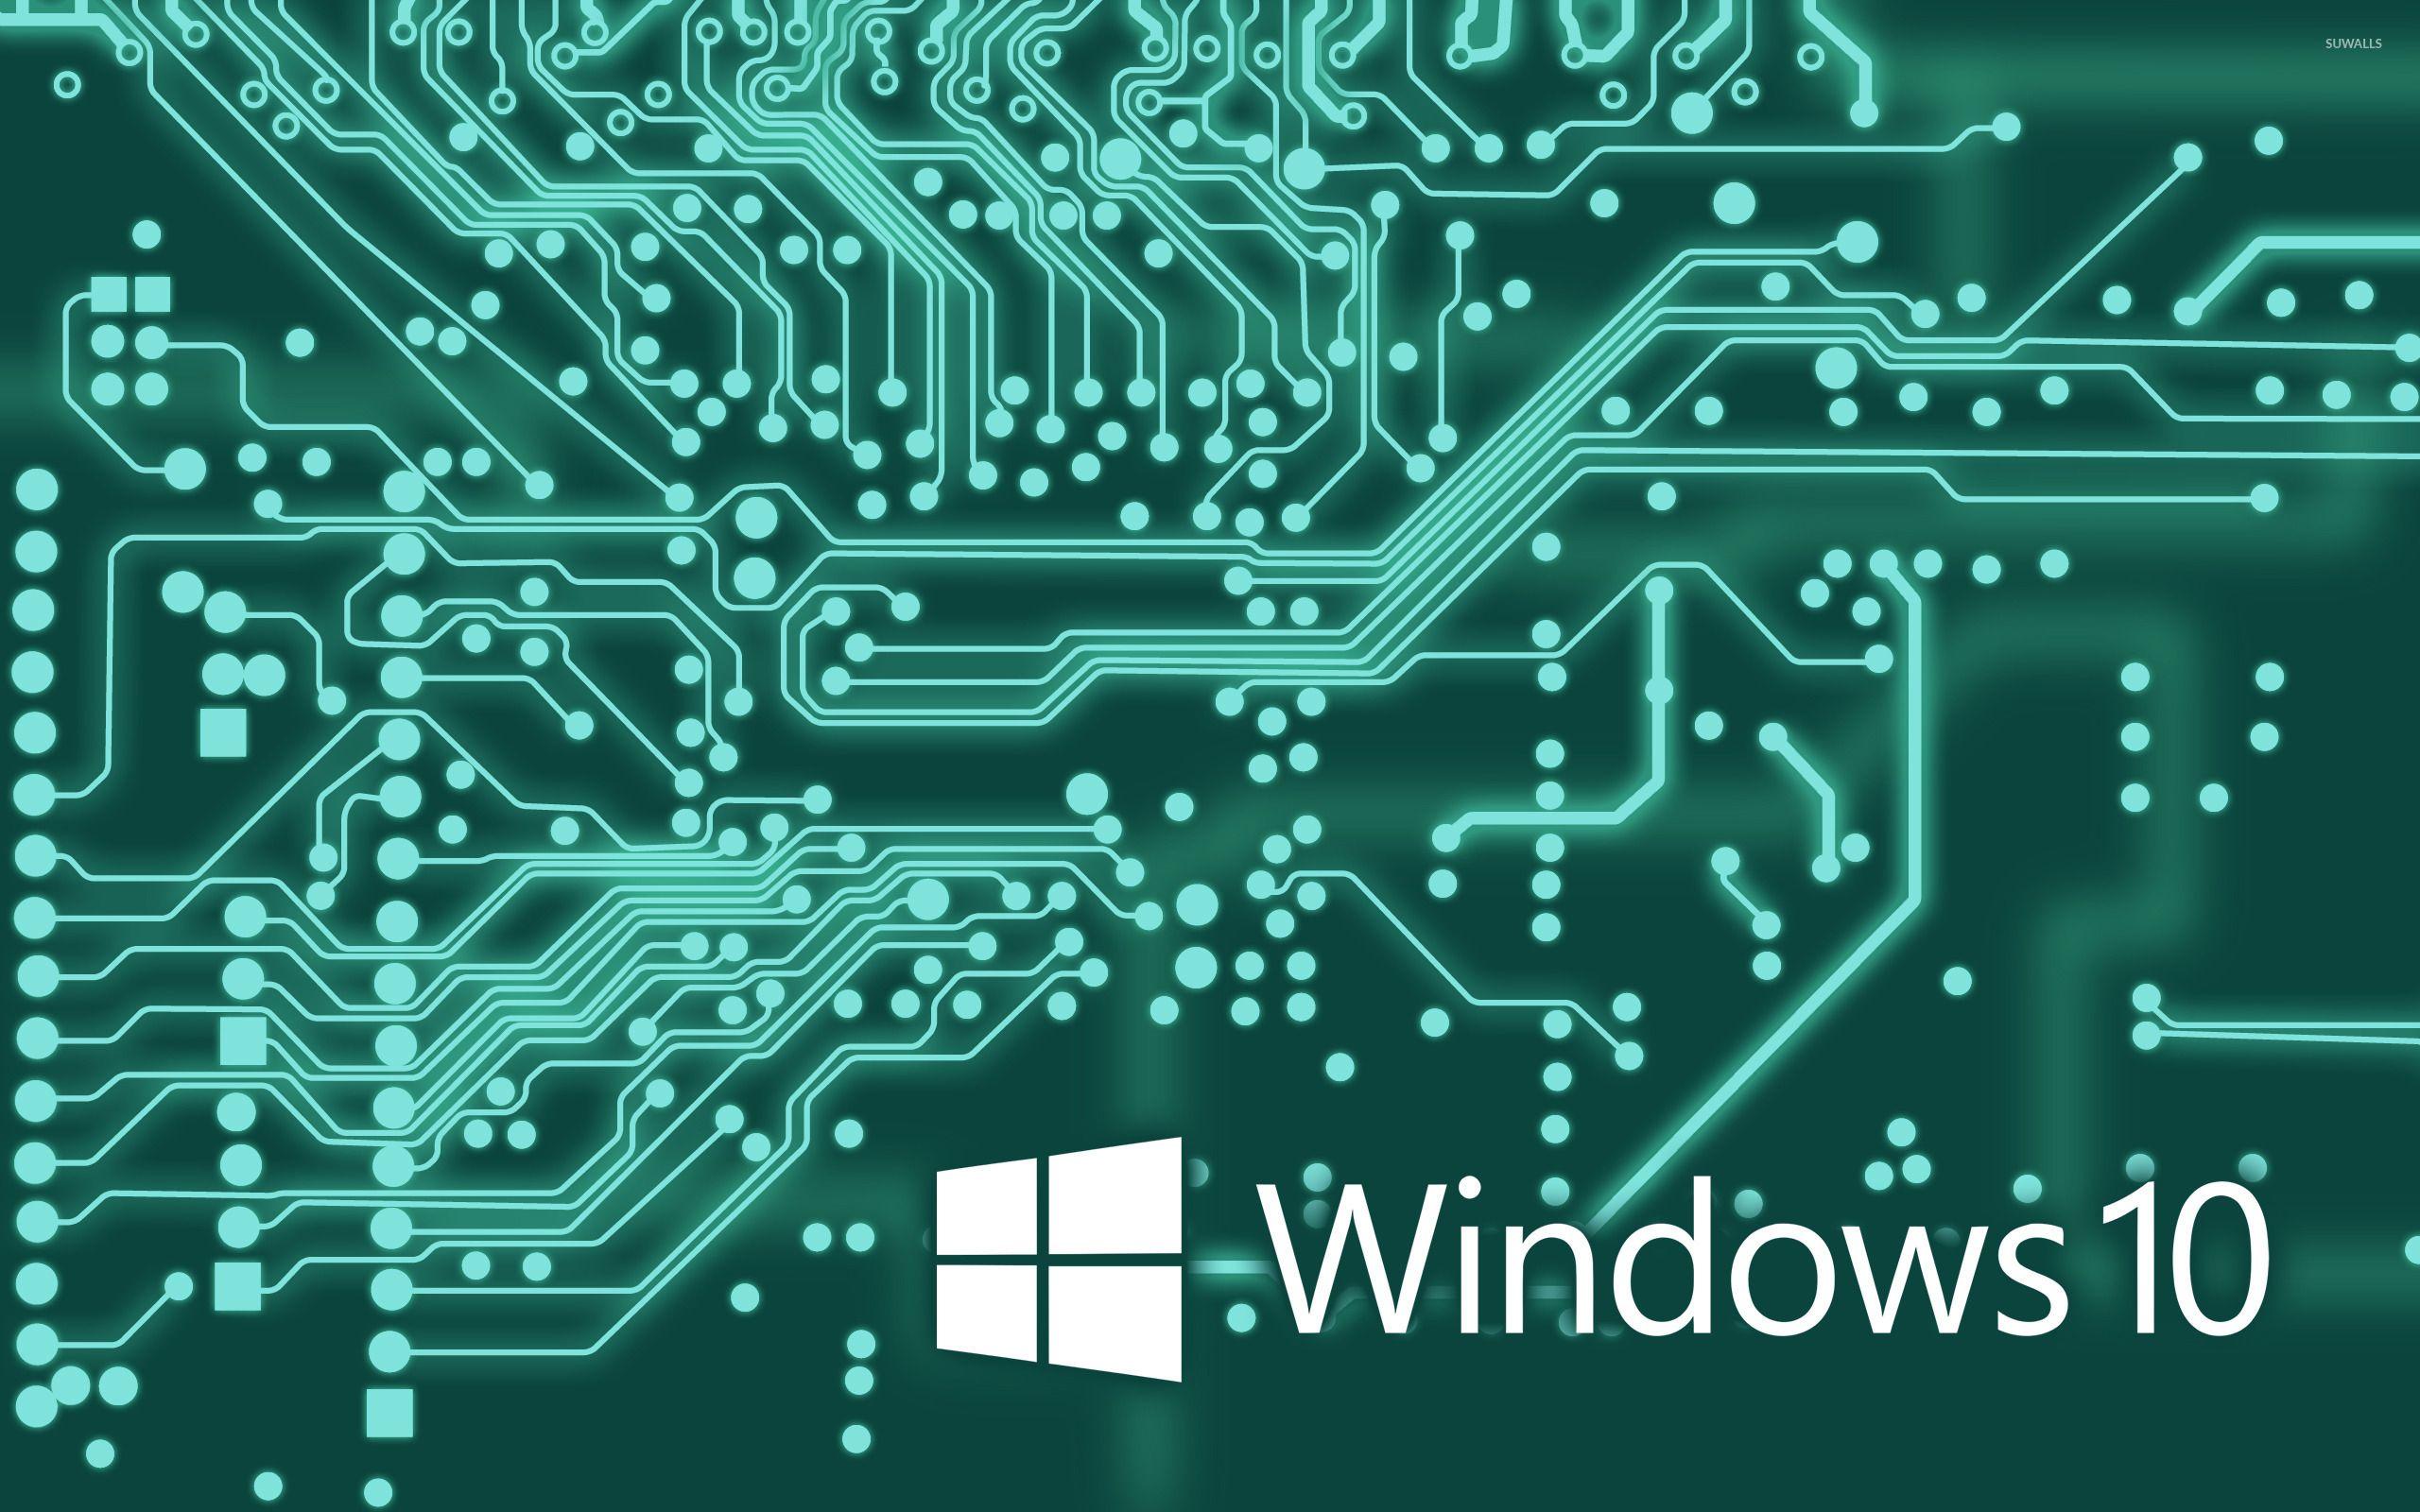 Windows 10 white text logo on the circuit board wallpaper wallpaper